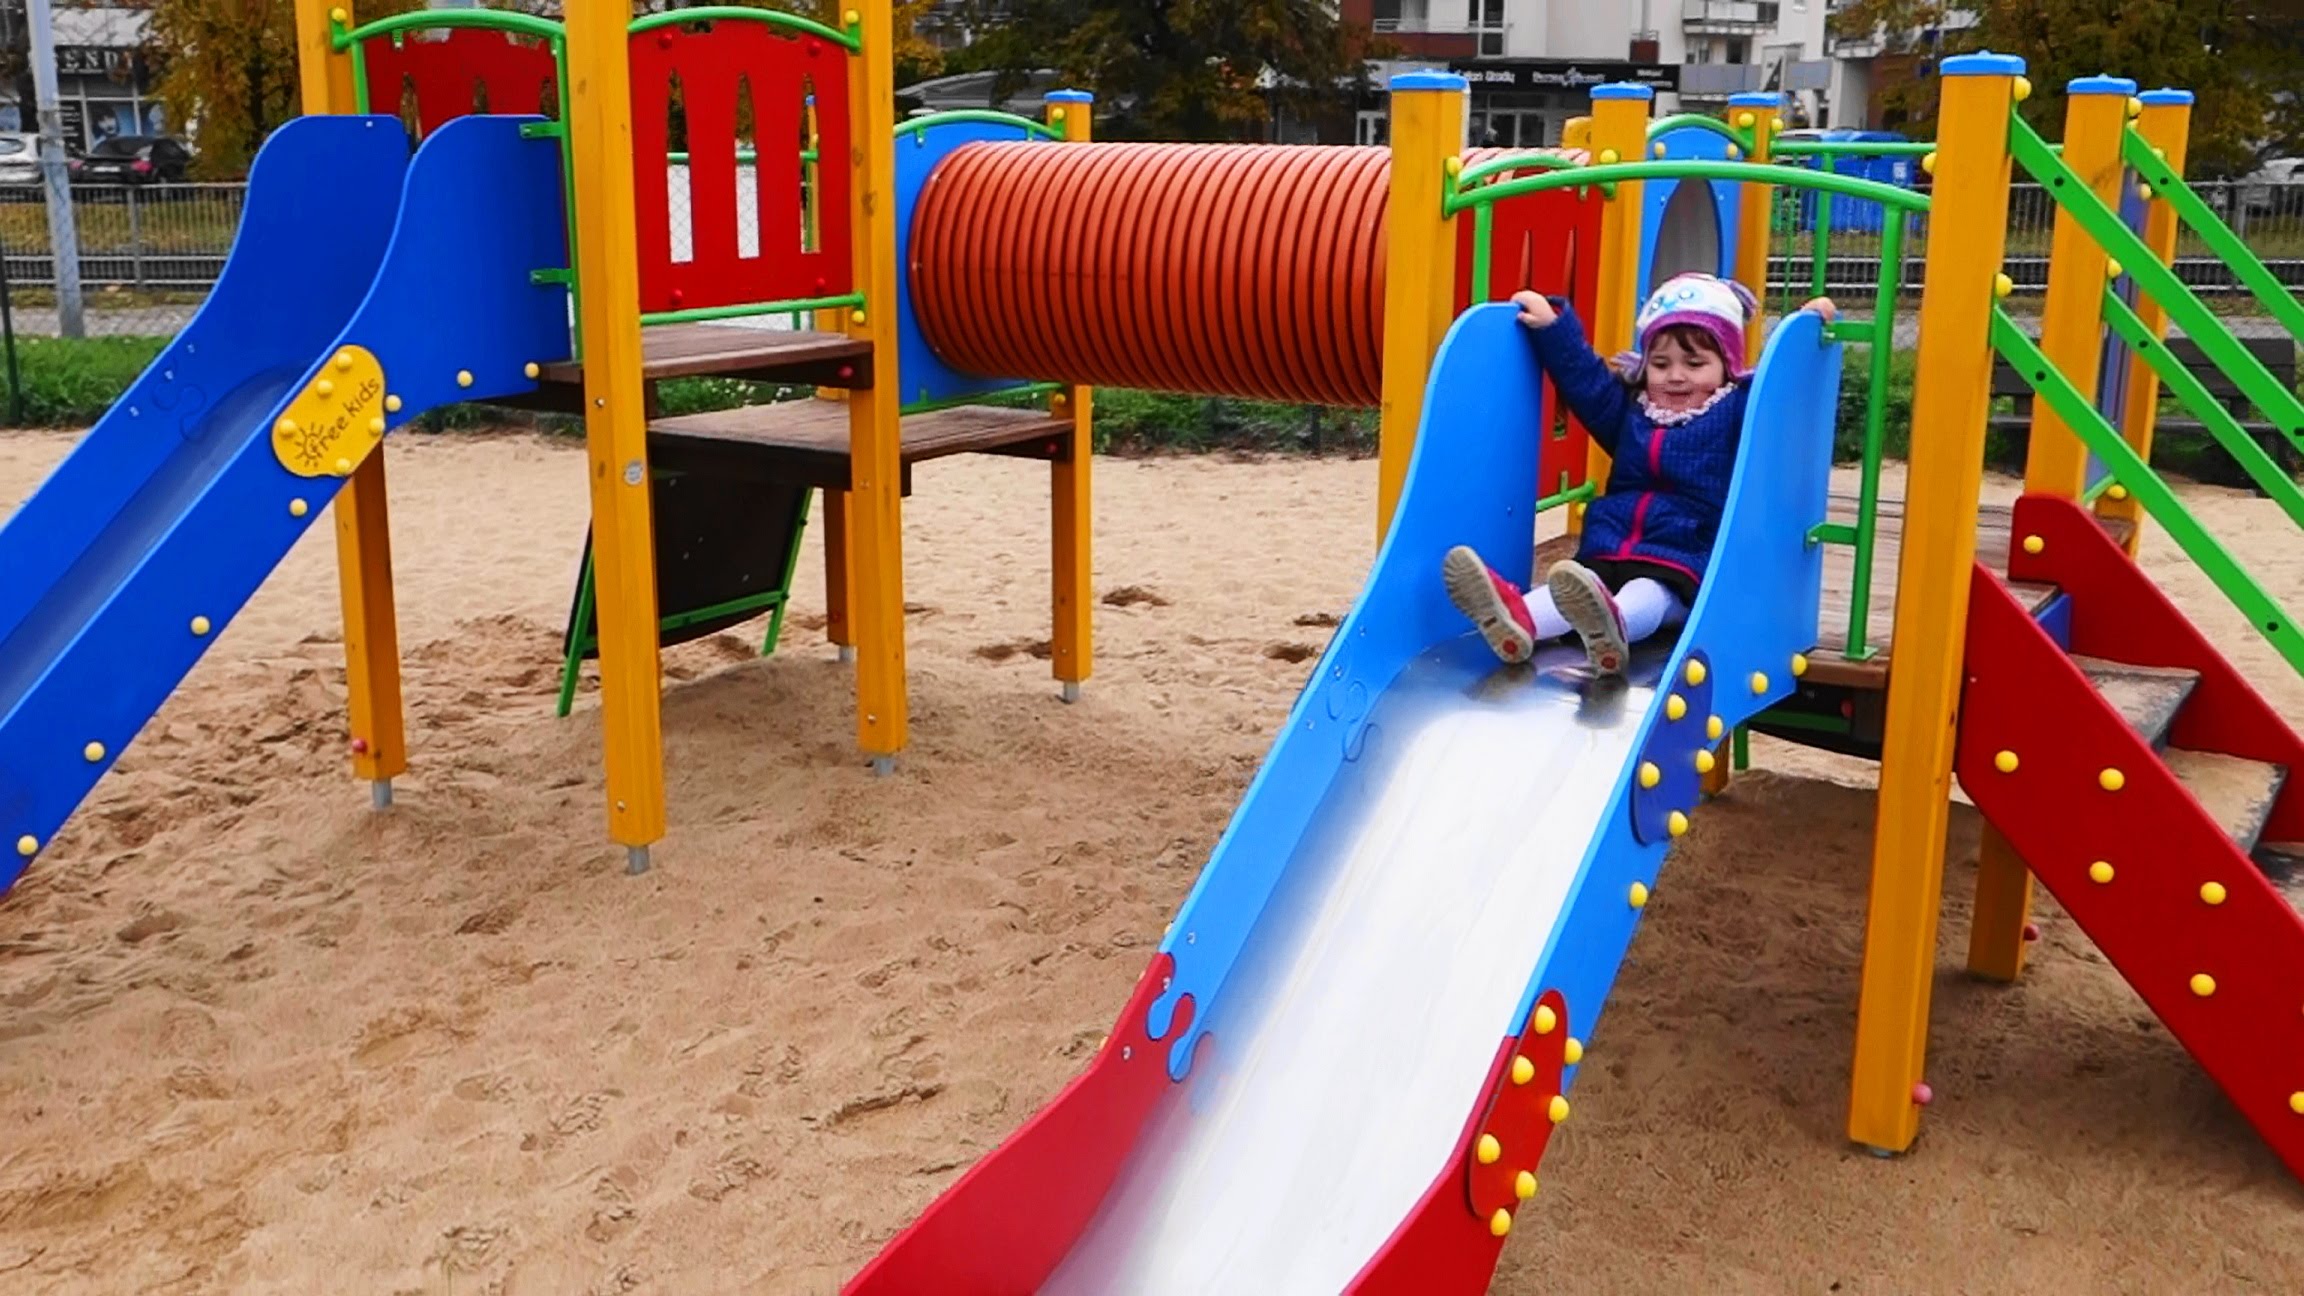 Children's Playground outdoor - kids on the playground - testing a ...